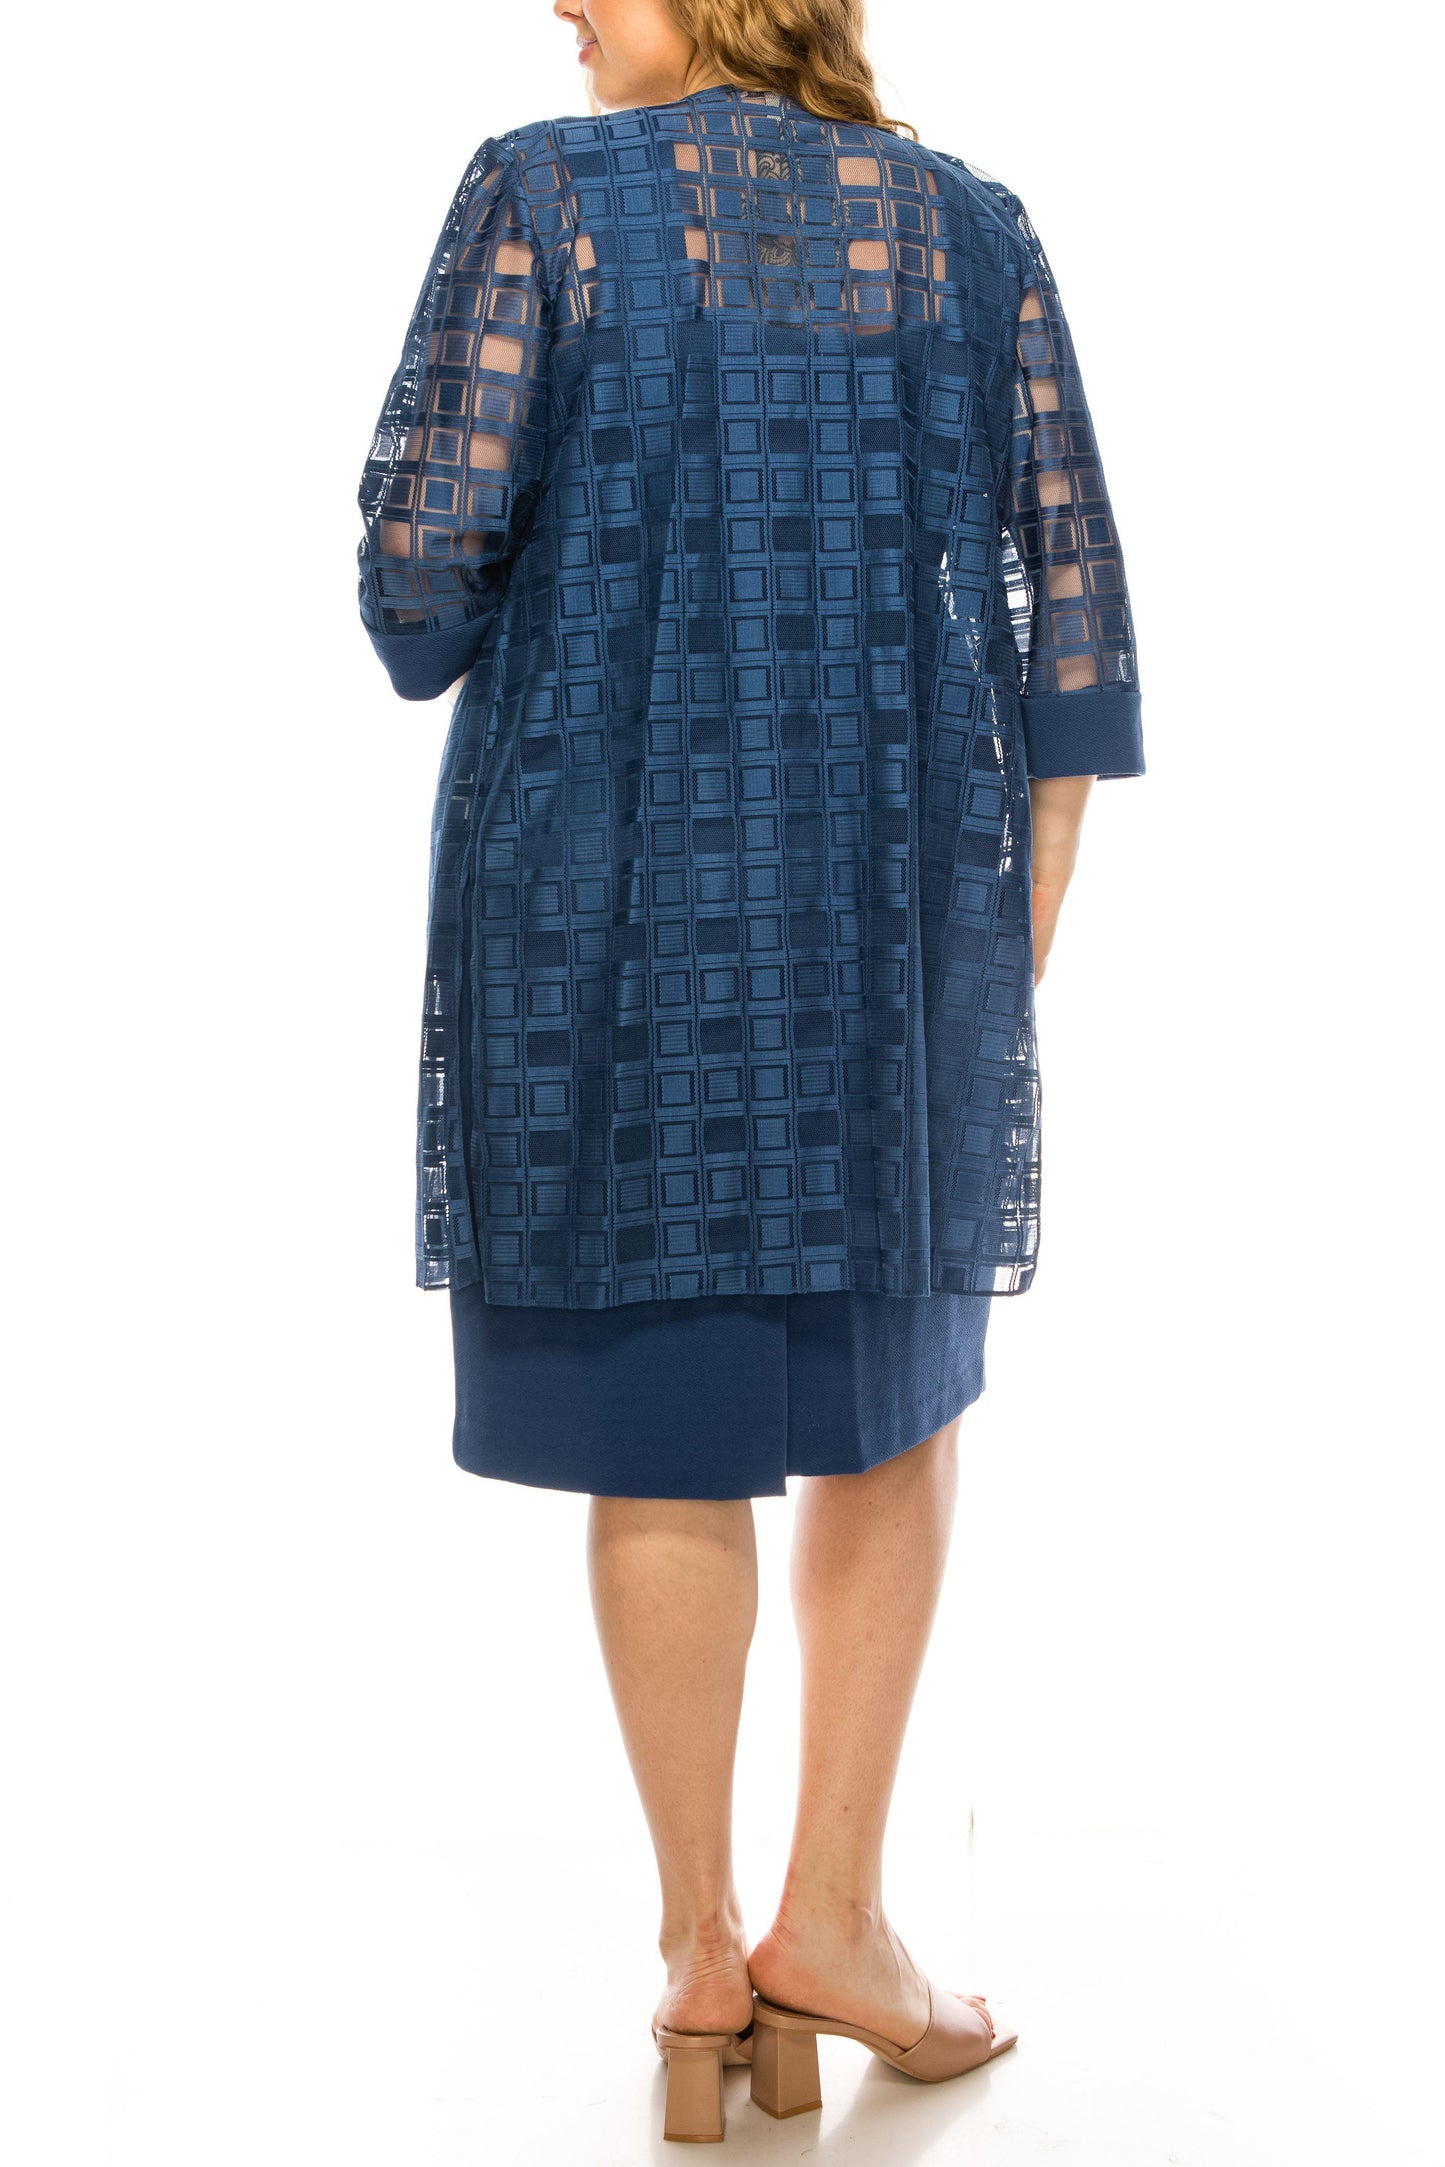 Maya Brooke Plus Size Short Jacket Dress 29163 - The Dress Outlet